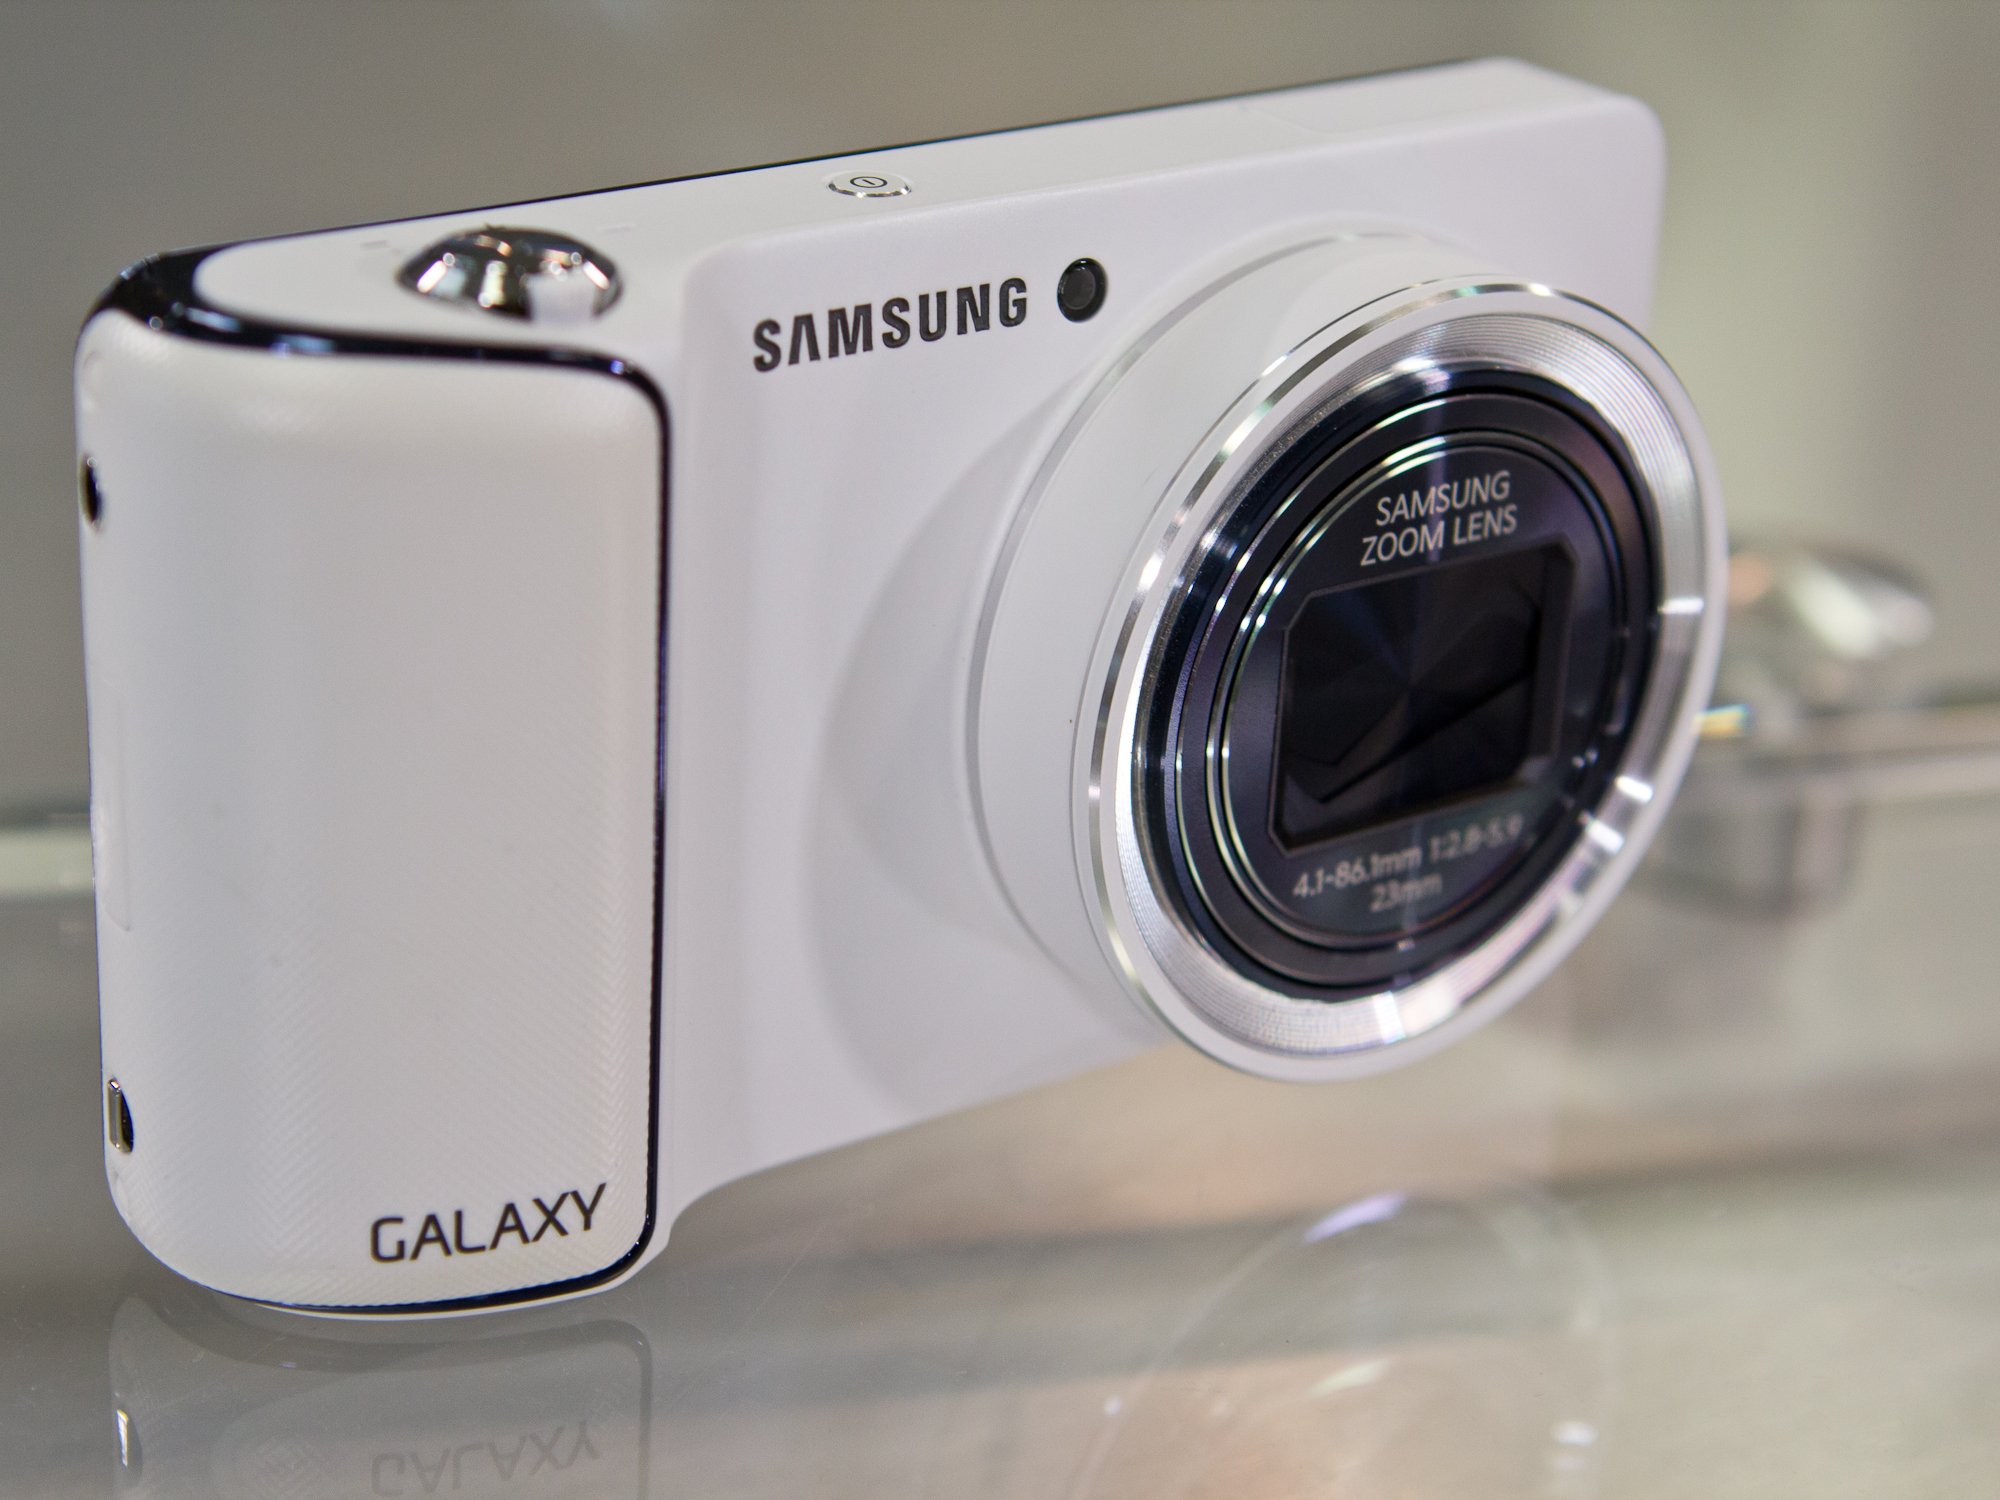 Samsung Galaxy Camera